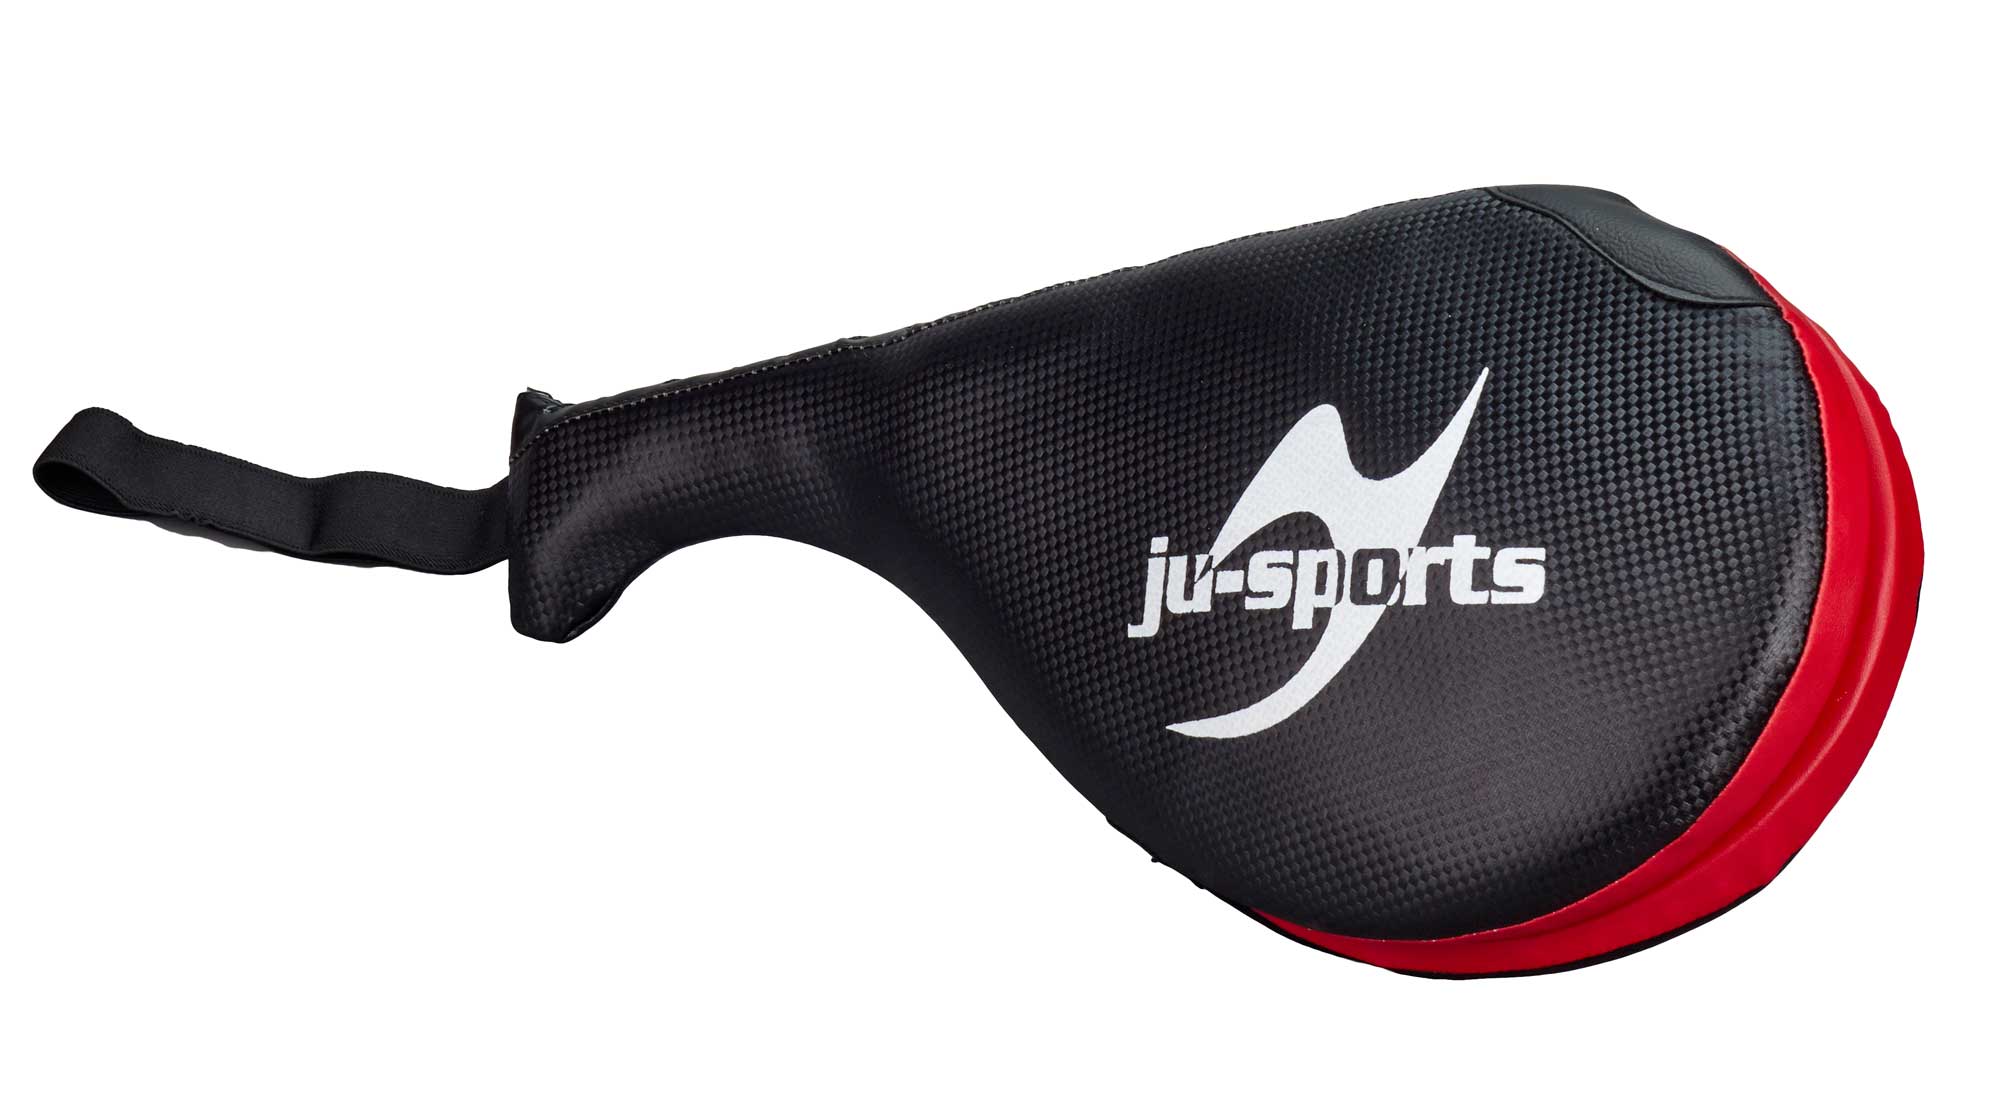 Ju-Sports Taekwondo Target Pad double, carbon look